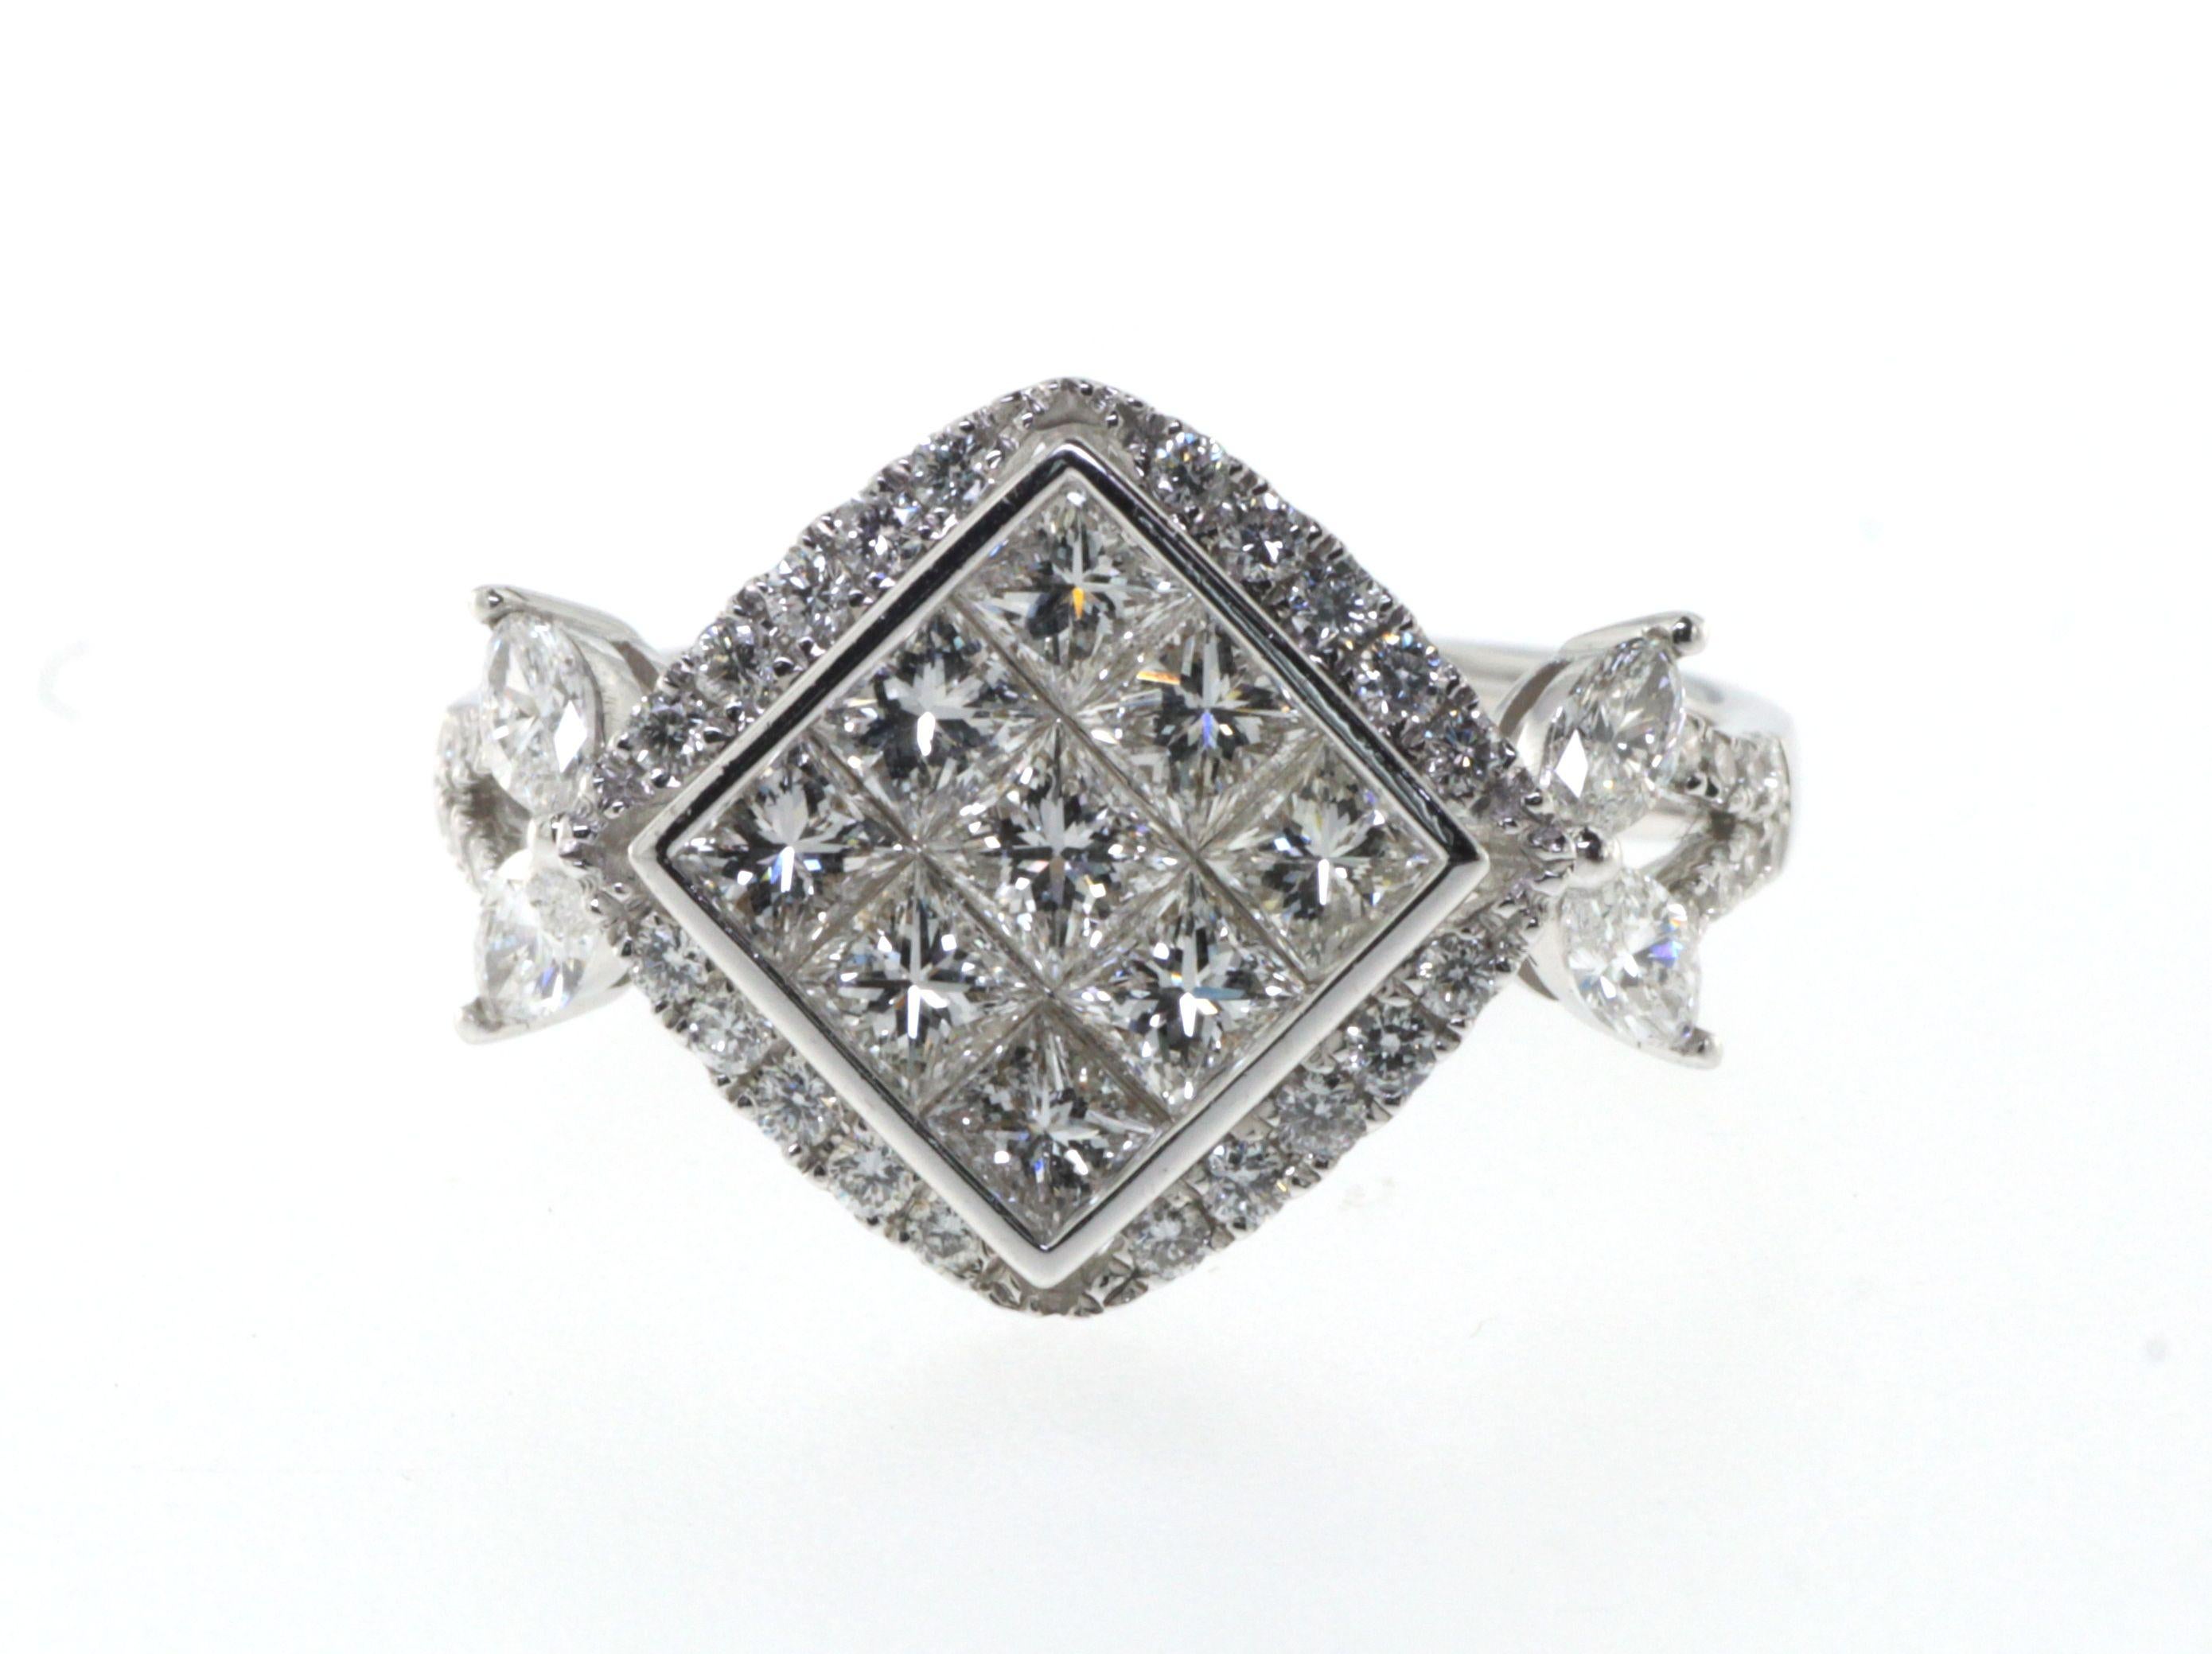 1.48Ct Princess Cut Diamond Ring in 18 Karat White Gold For Sale 1